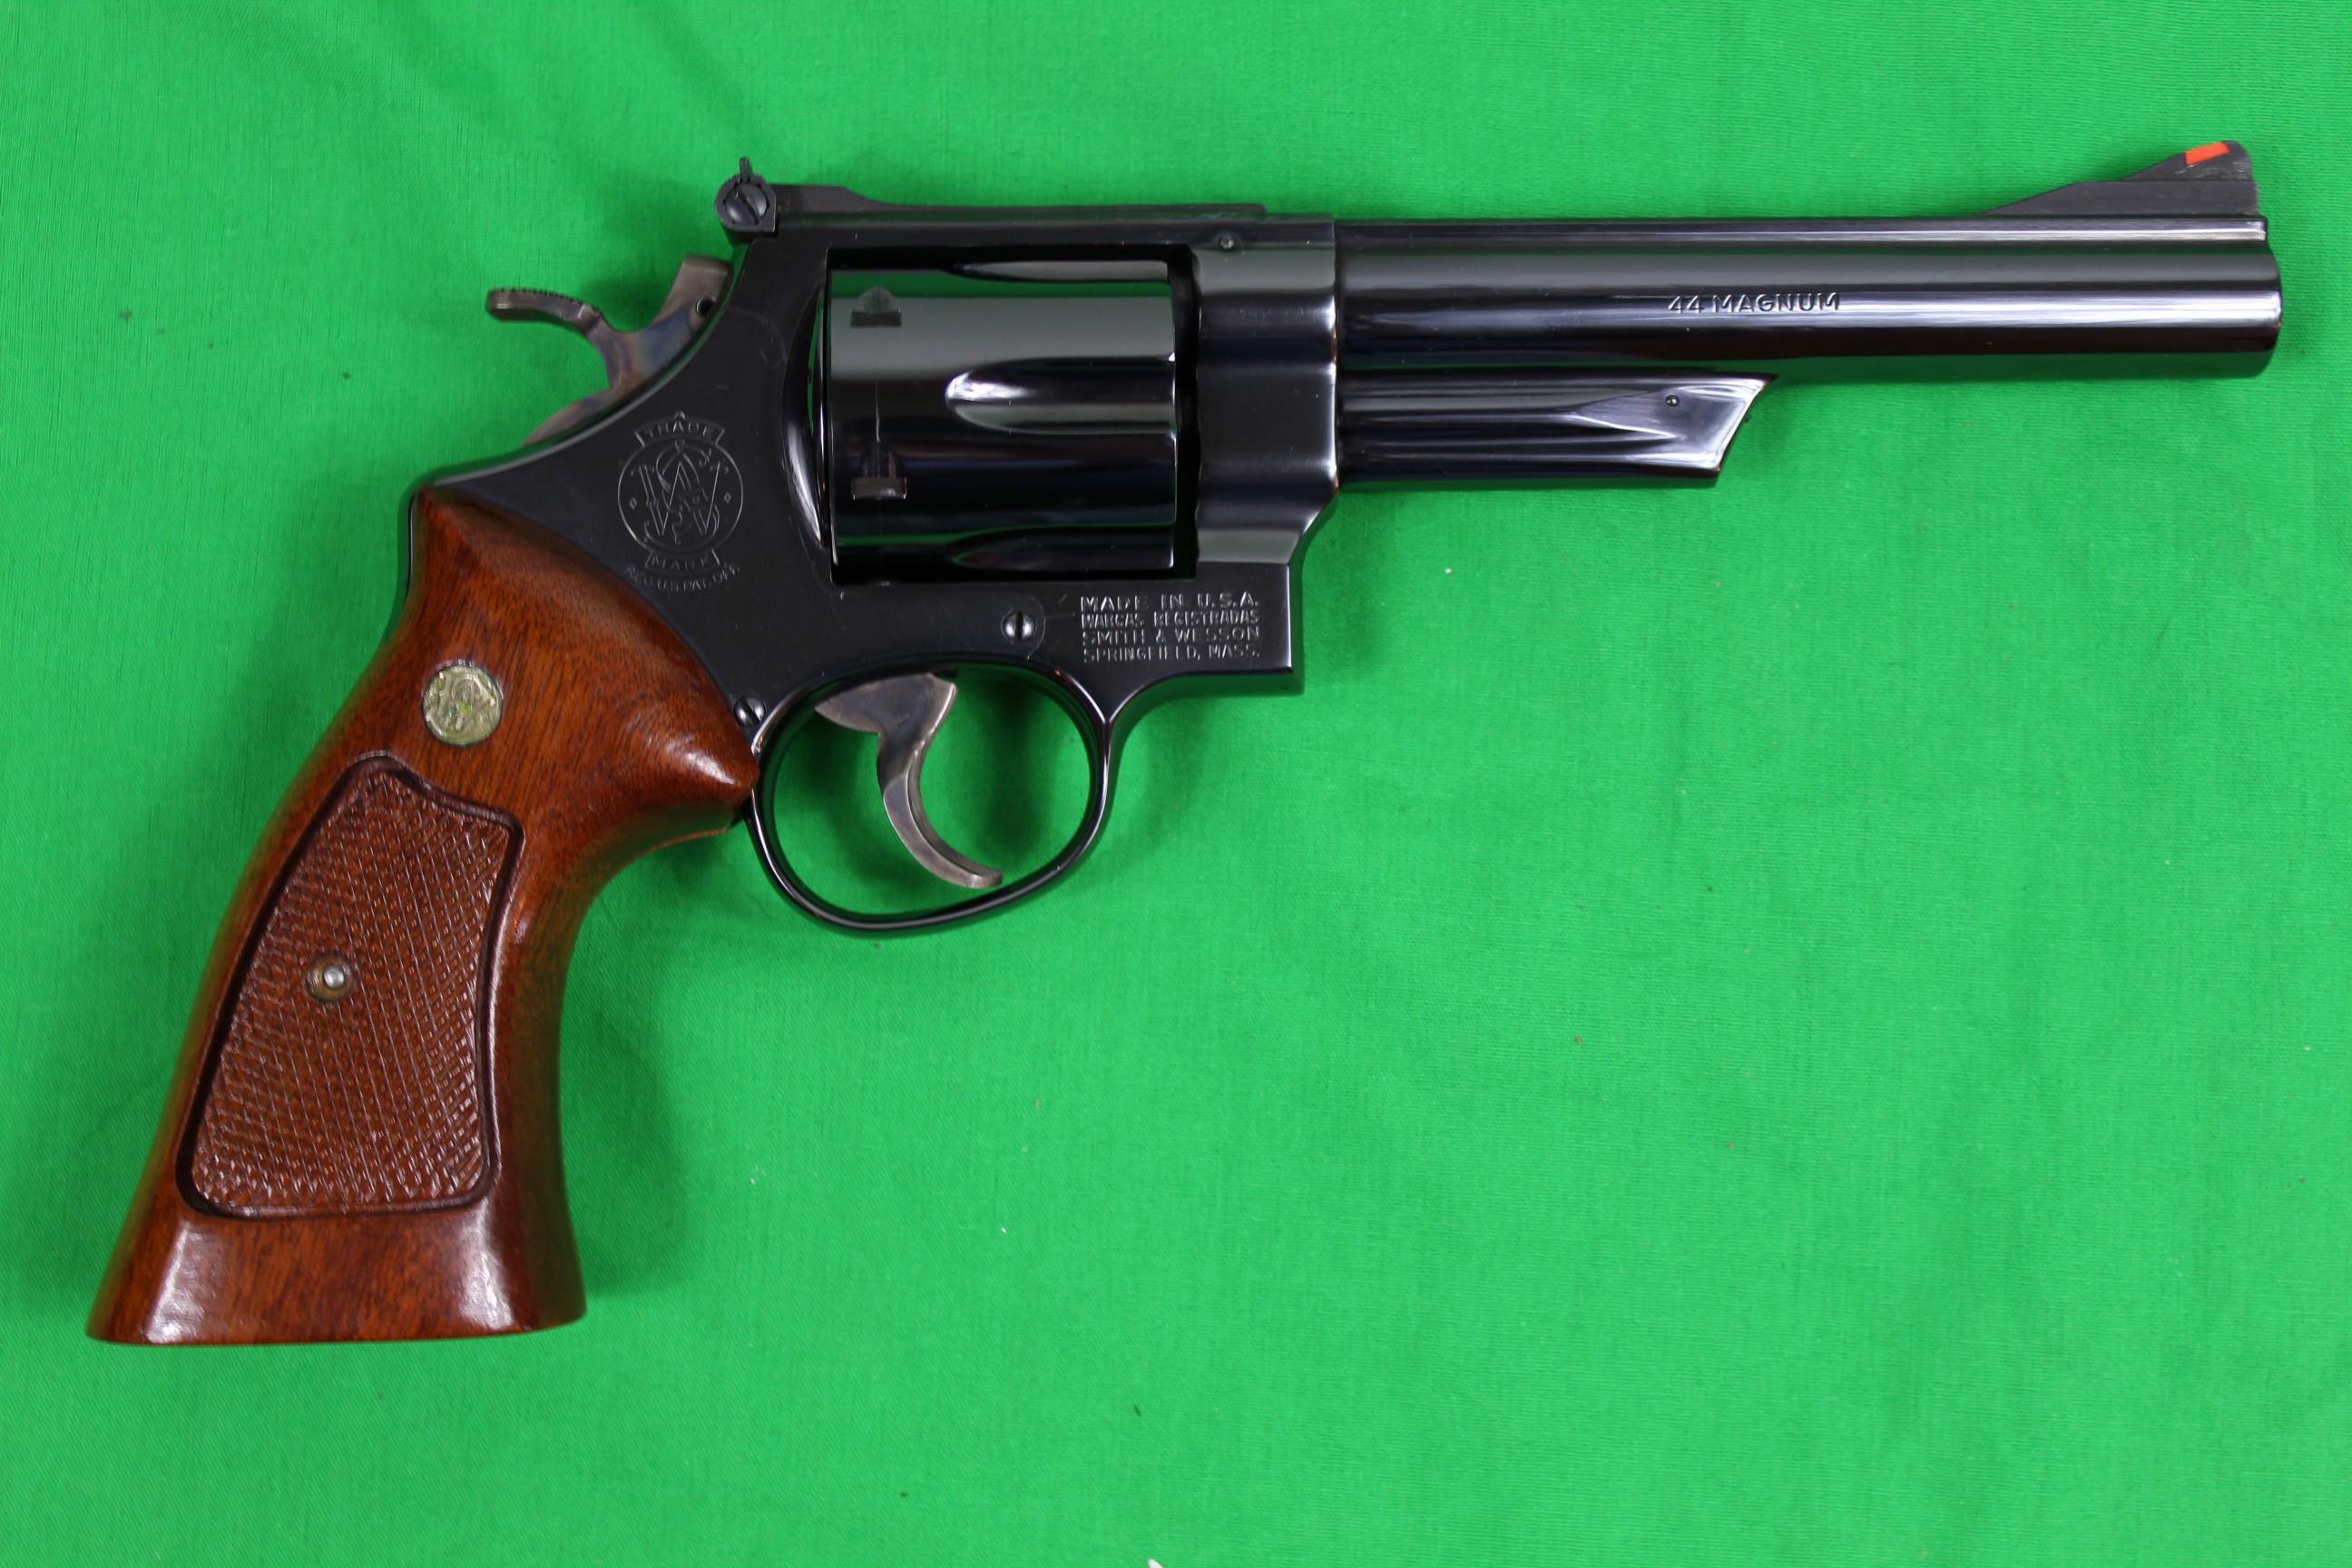 Smith & Wesson model 29-2 revolver, caliber 44 magnum, s/n N619603.  Blued